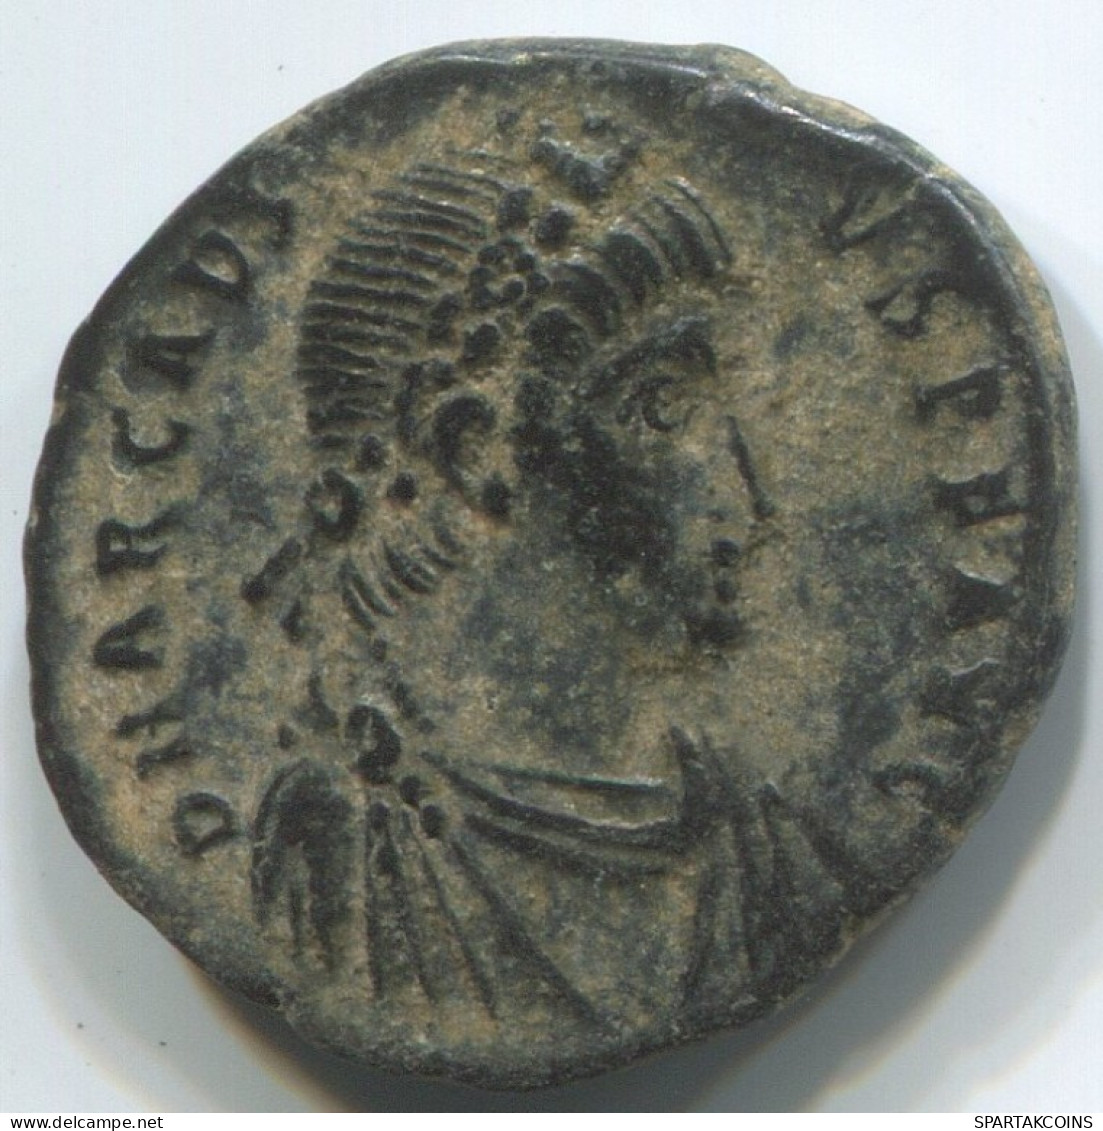 LATE ROMAN EMPIRE Pièce Antique Authentique Roman Pièce 2.3g/18mm #ANT2361.14.F.A - Der Spätrömanischen Reich (363 / 476)